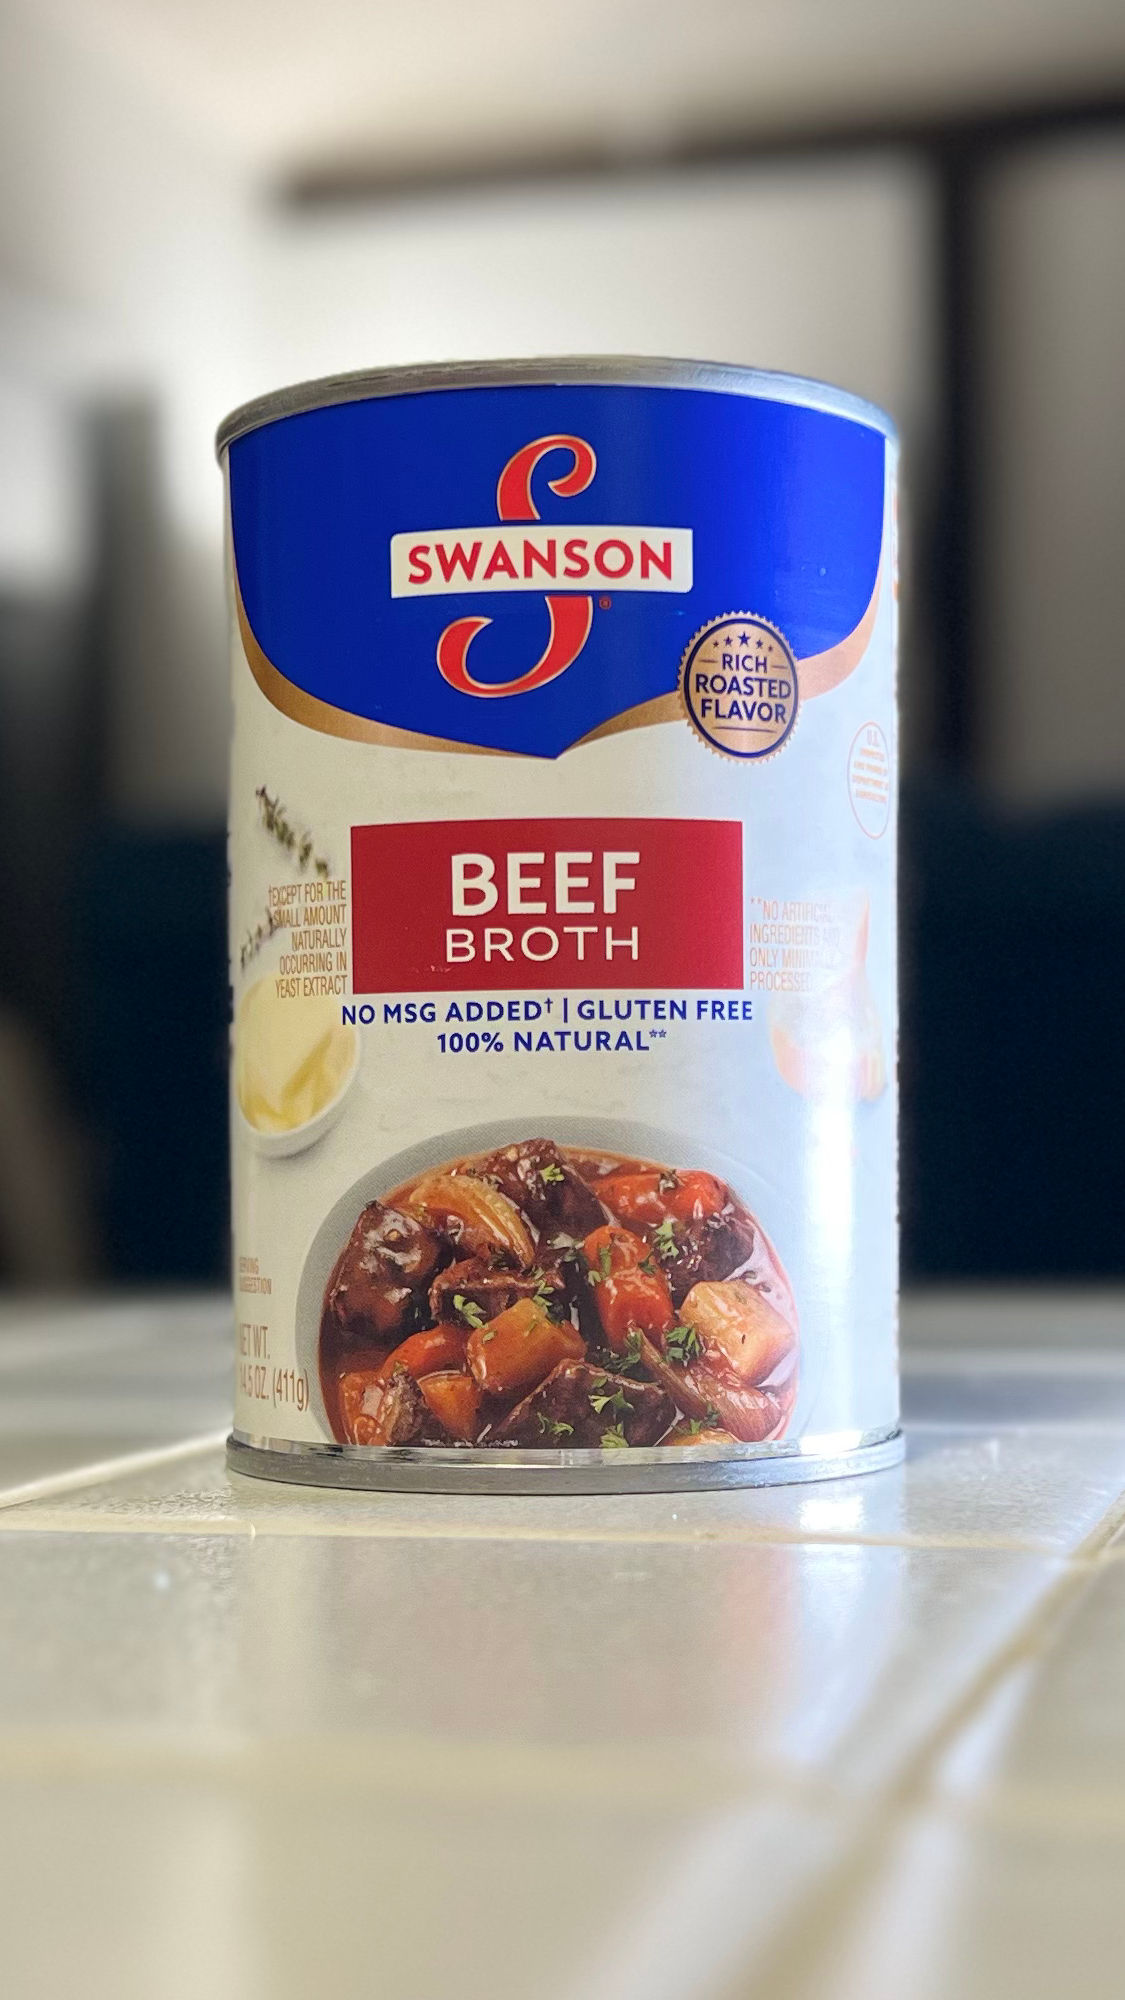 Beef Both Swanson 100% Natural